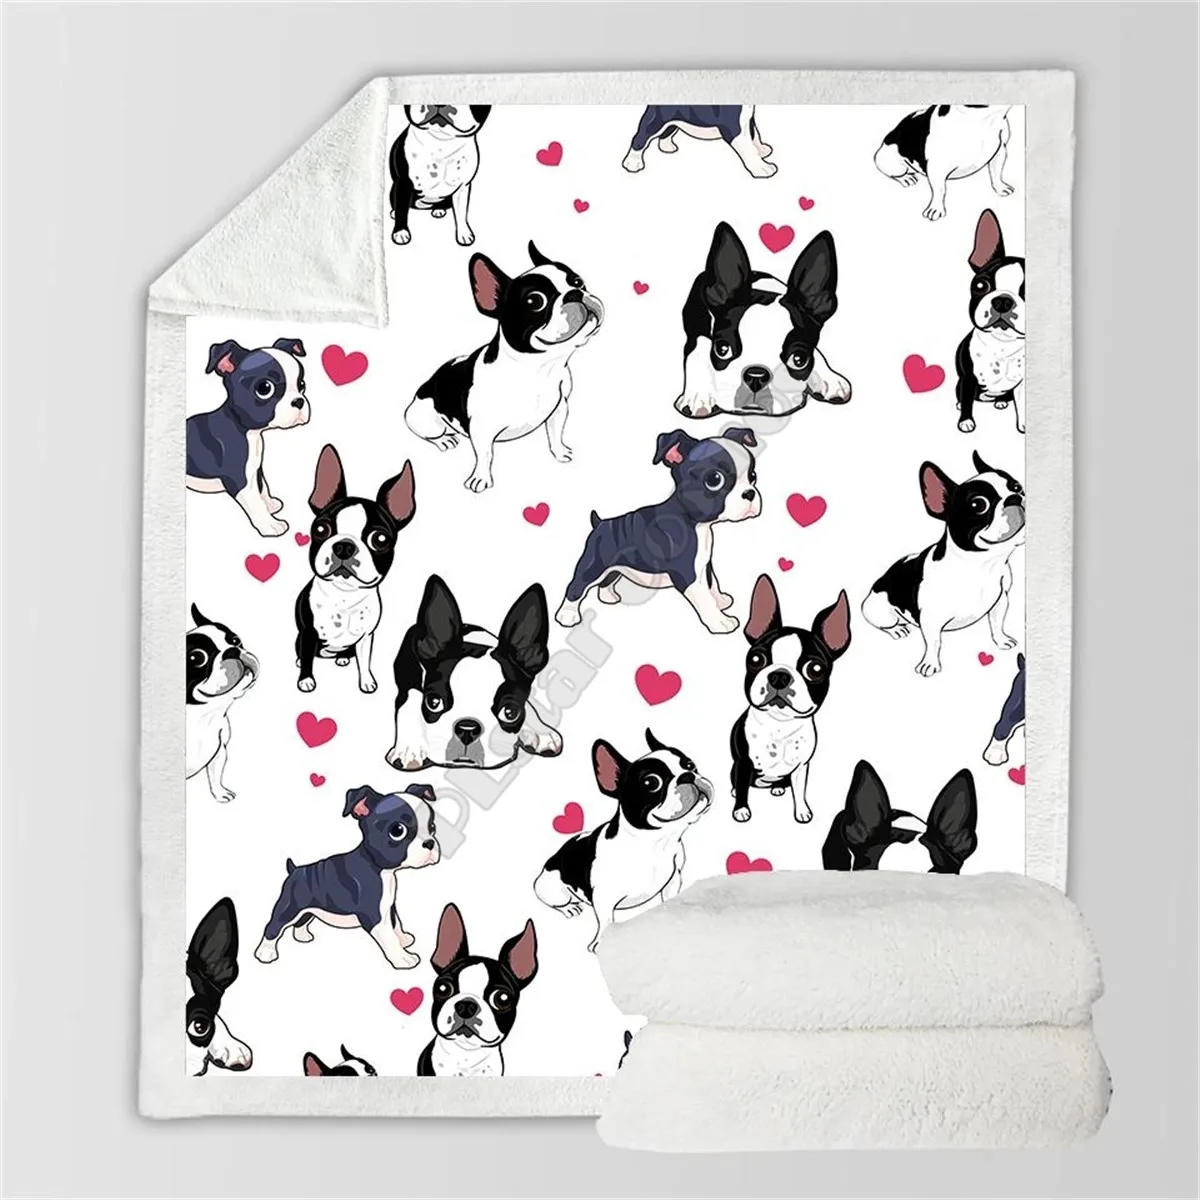 

Love Cute Boston Terrier Cozy Premium Fleece Blanket 3D printed Sherpa Blanket on Bed Home Textiles